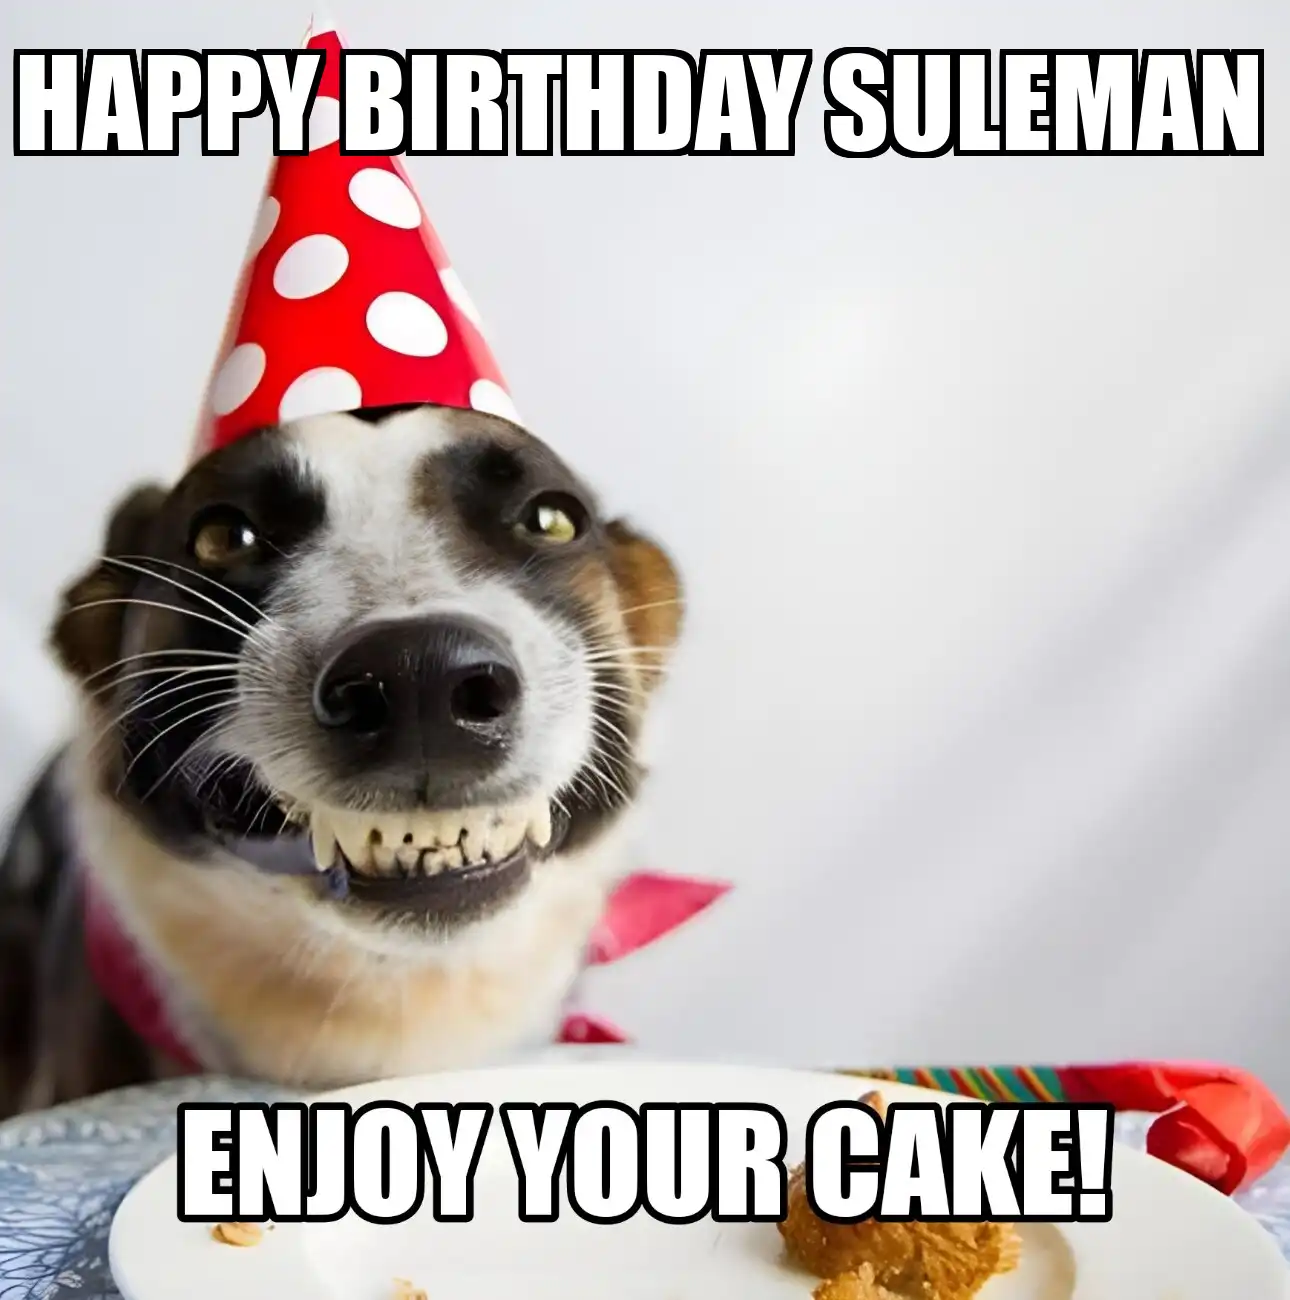 Happy Birthday Suleman Enjoy Your Cake Dog Meme